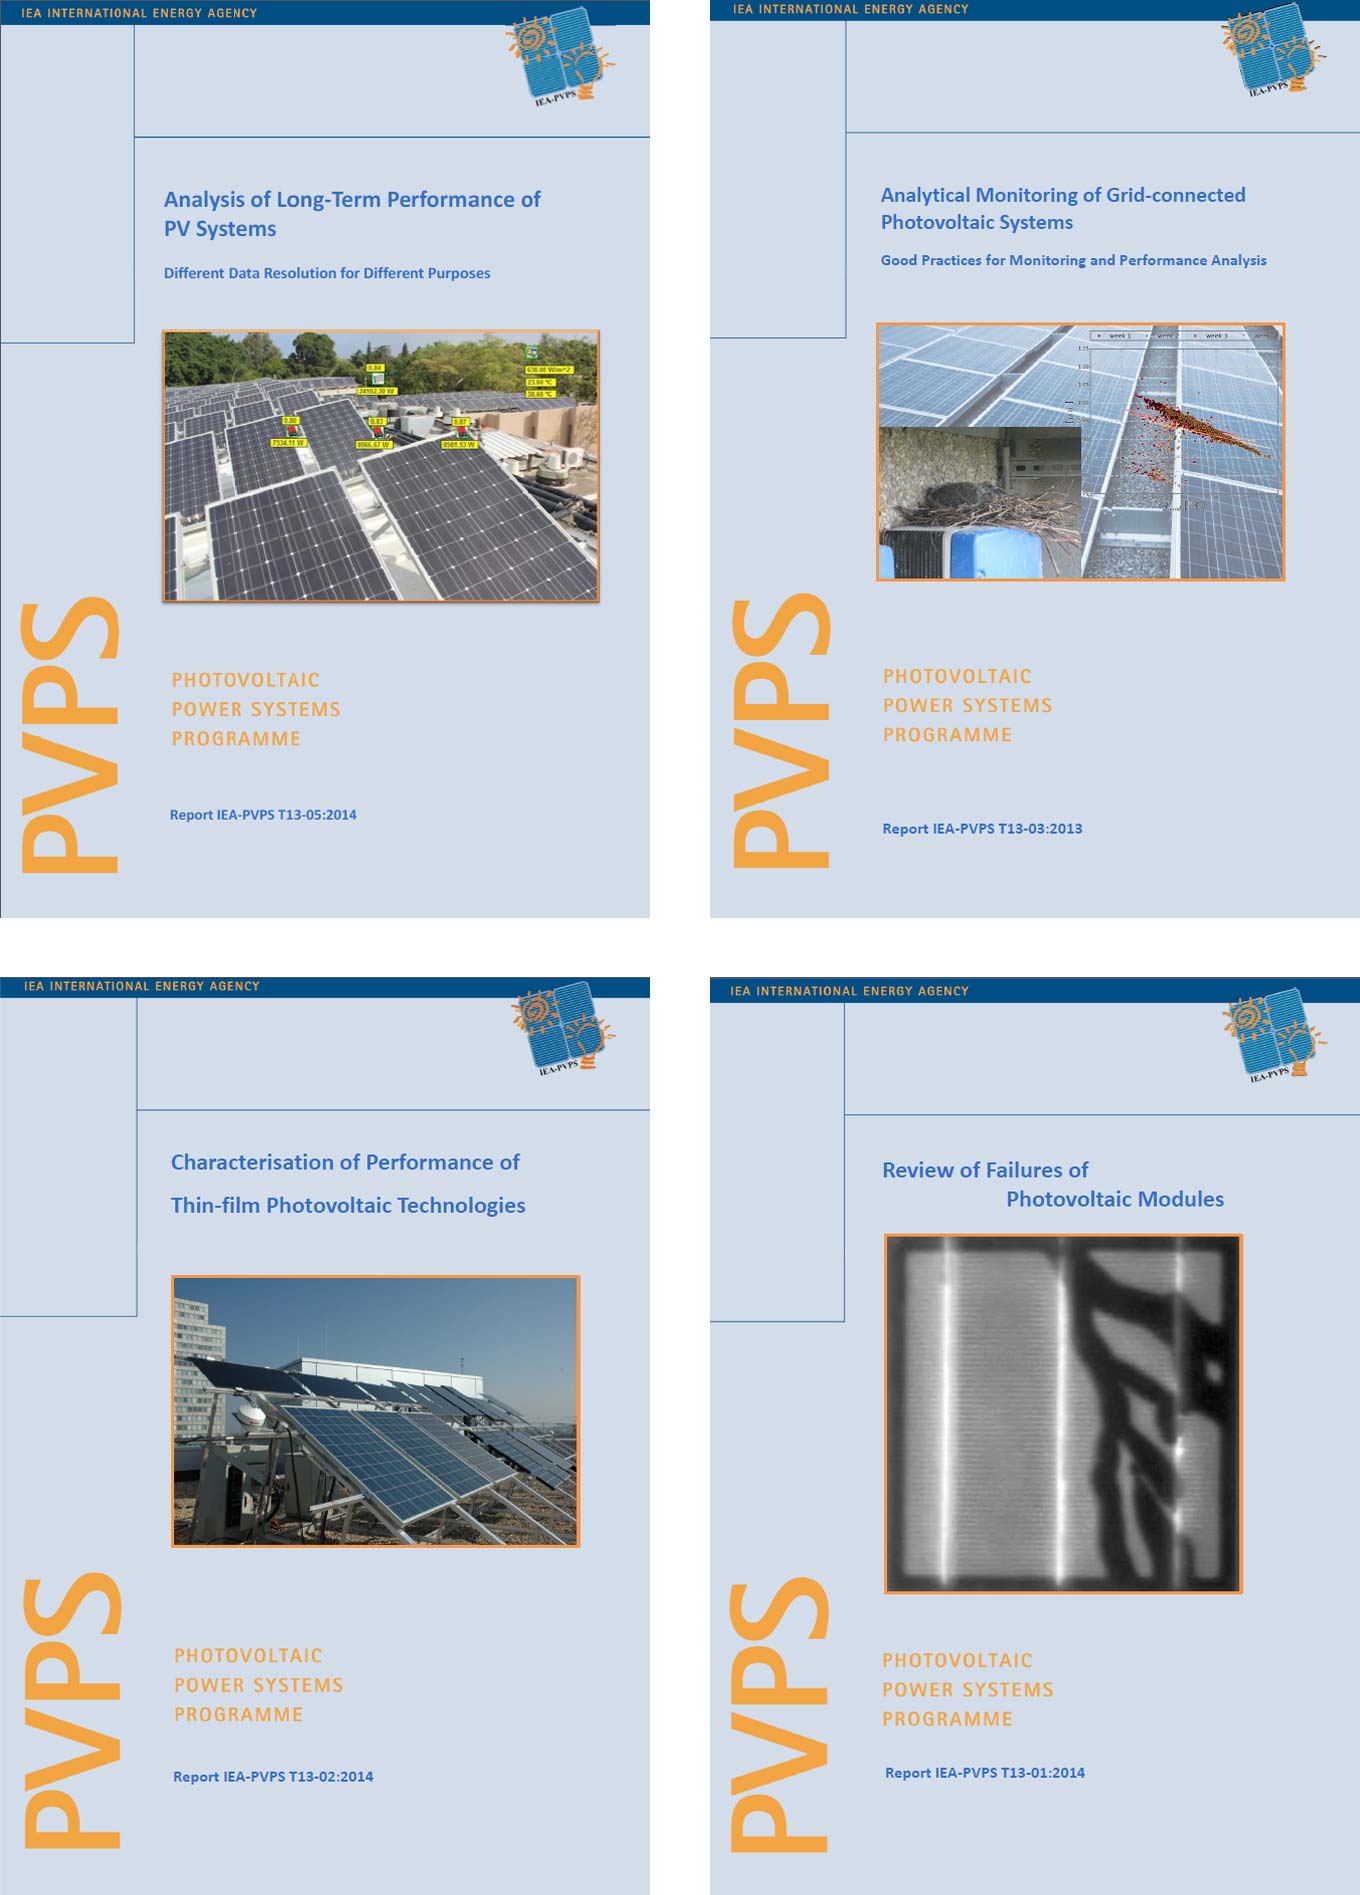 IEA Photovoltaic Power System Programs